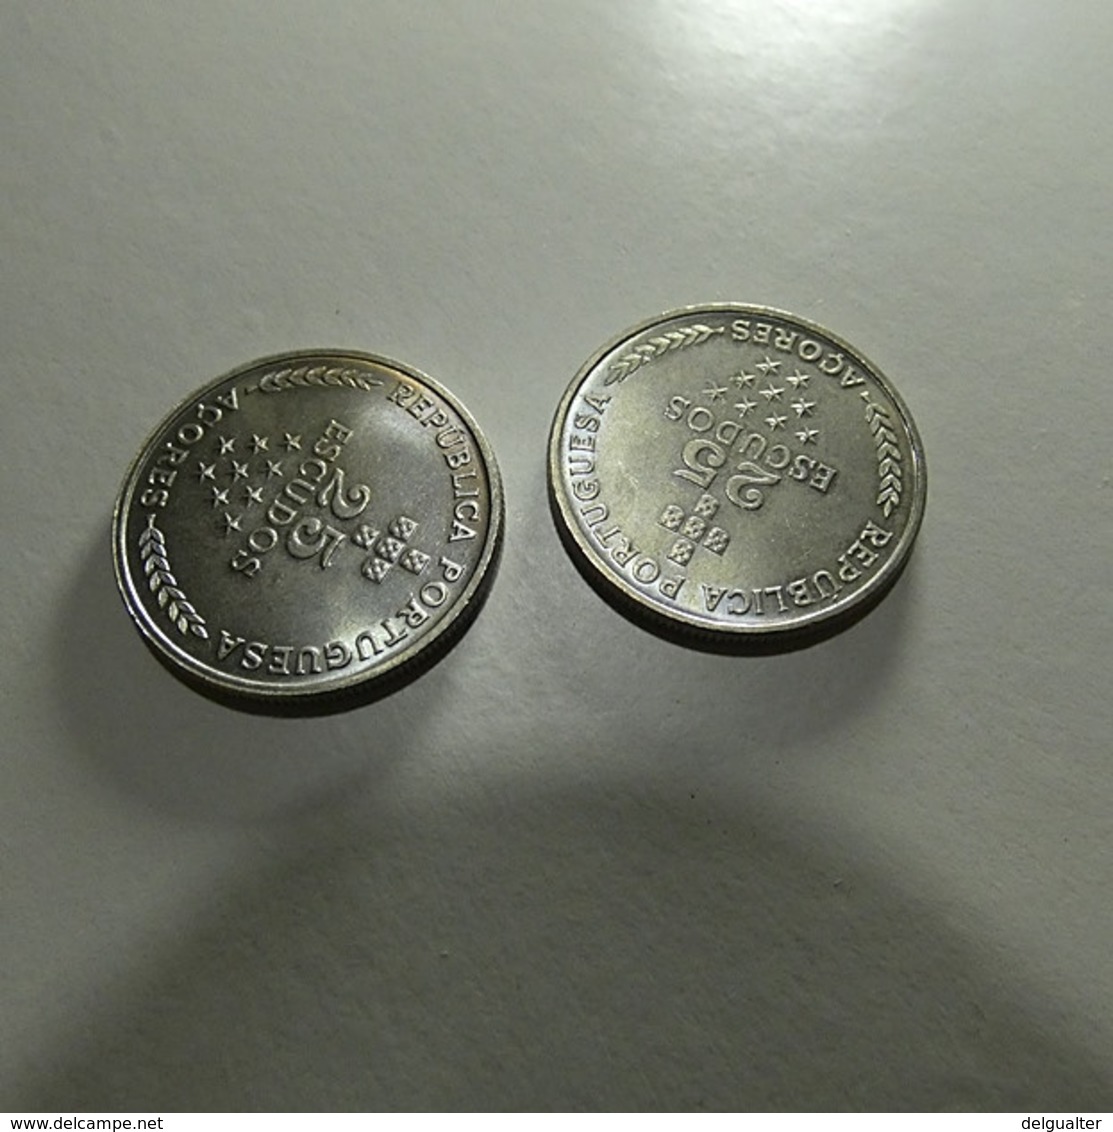 Lot Portuguese Coins High grade - See description inside - Total 156 coins